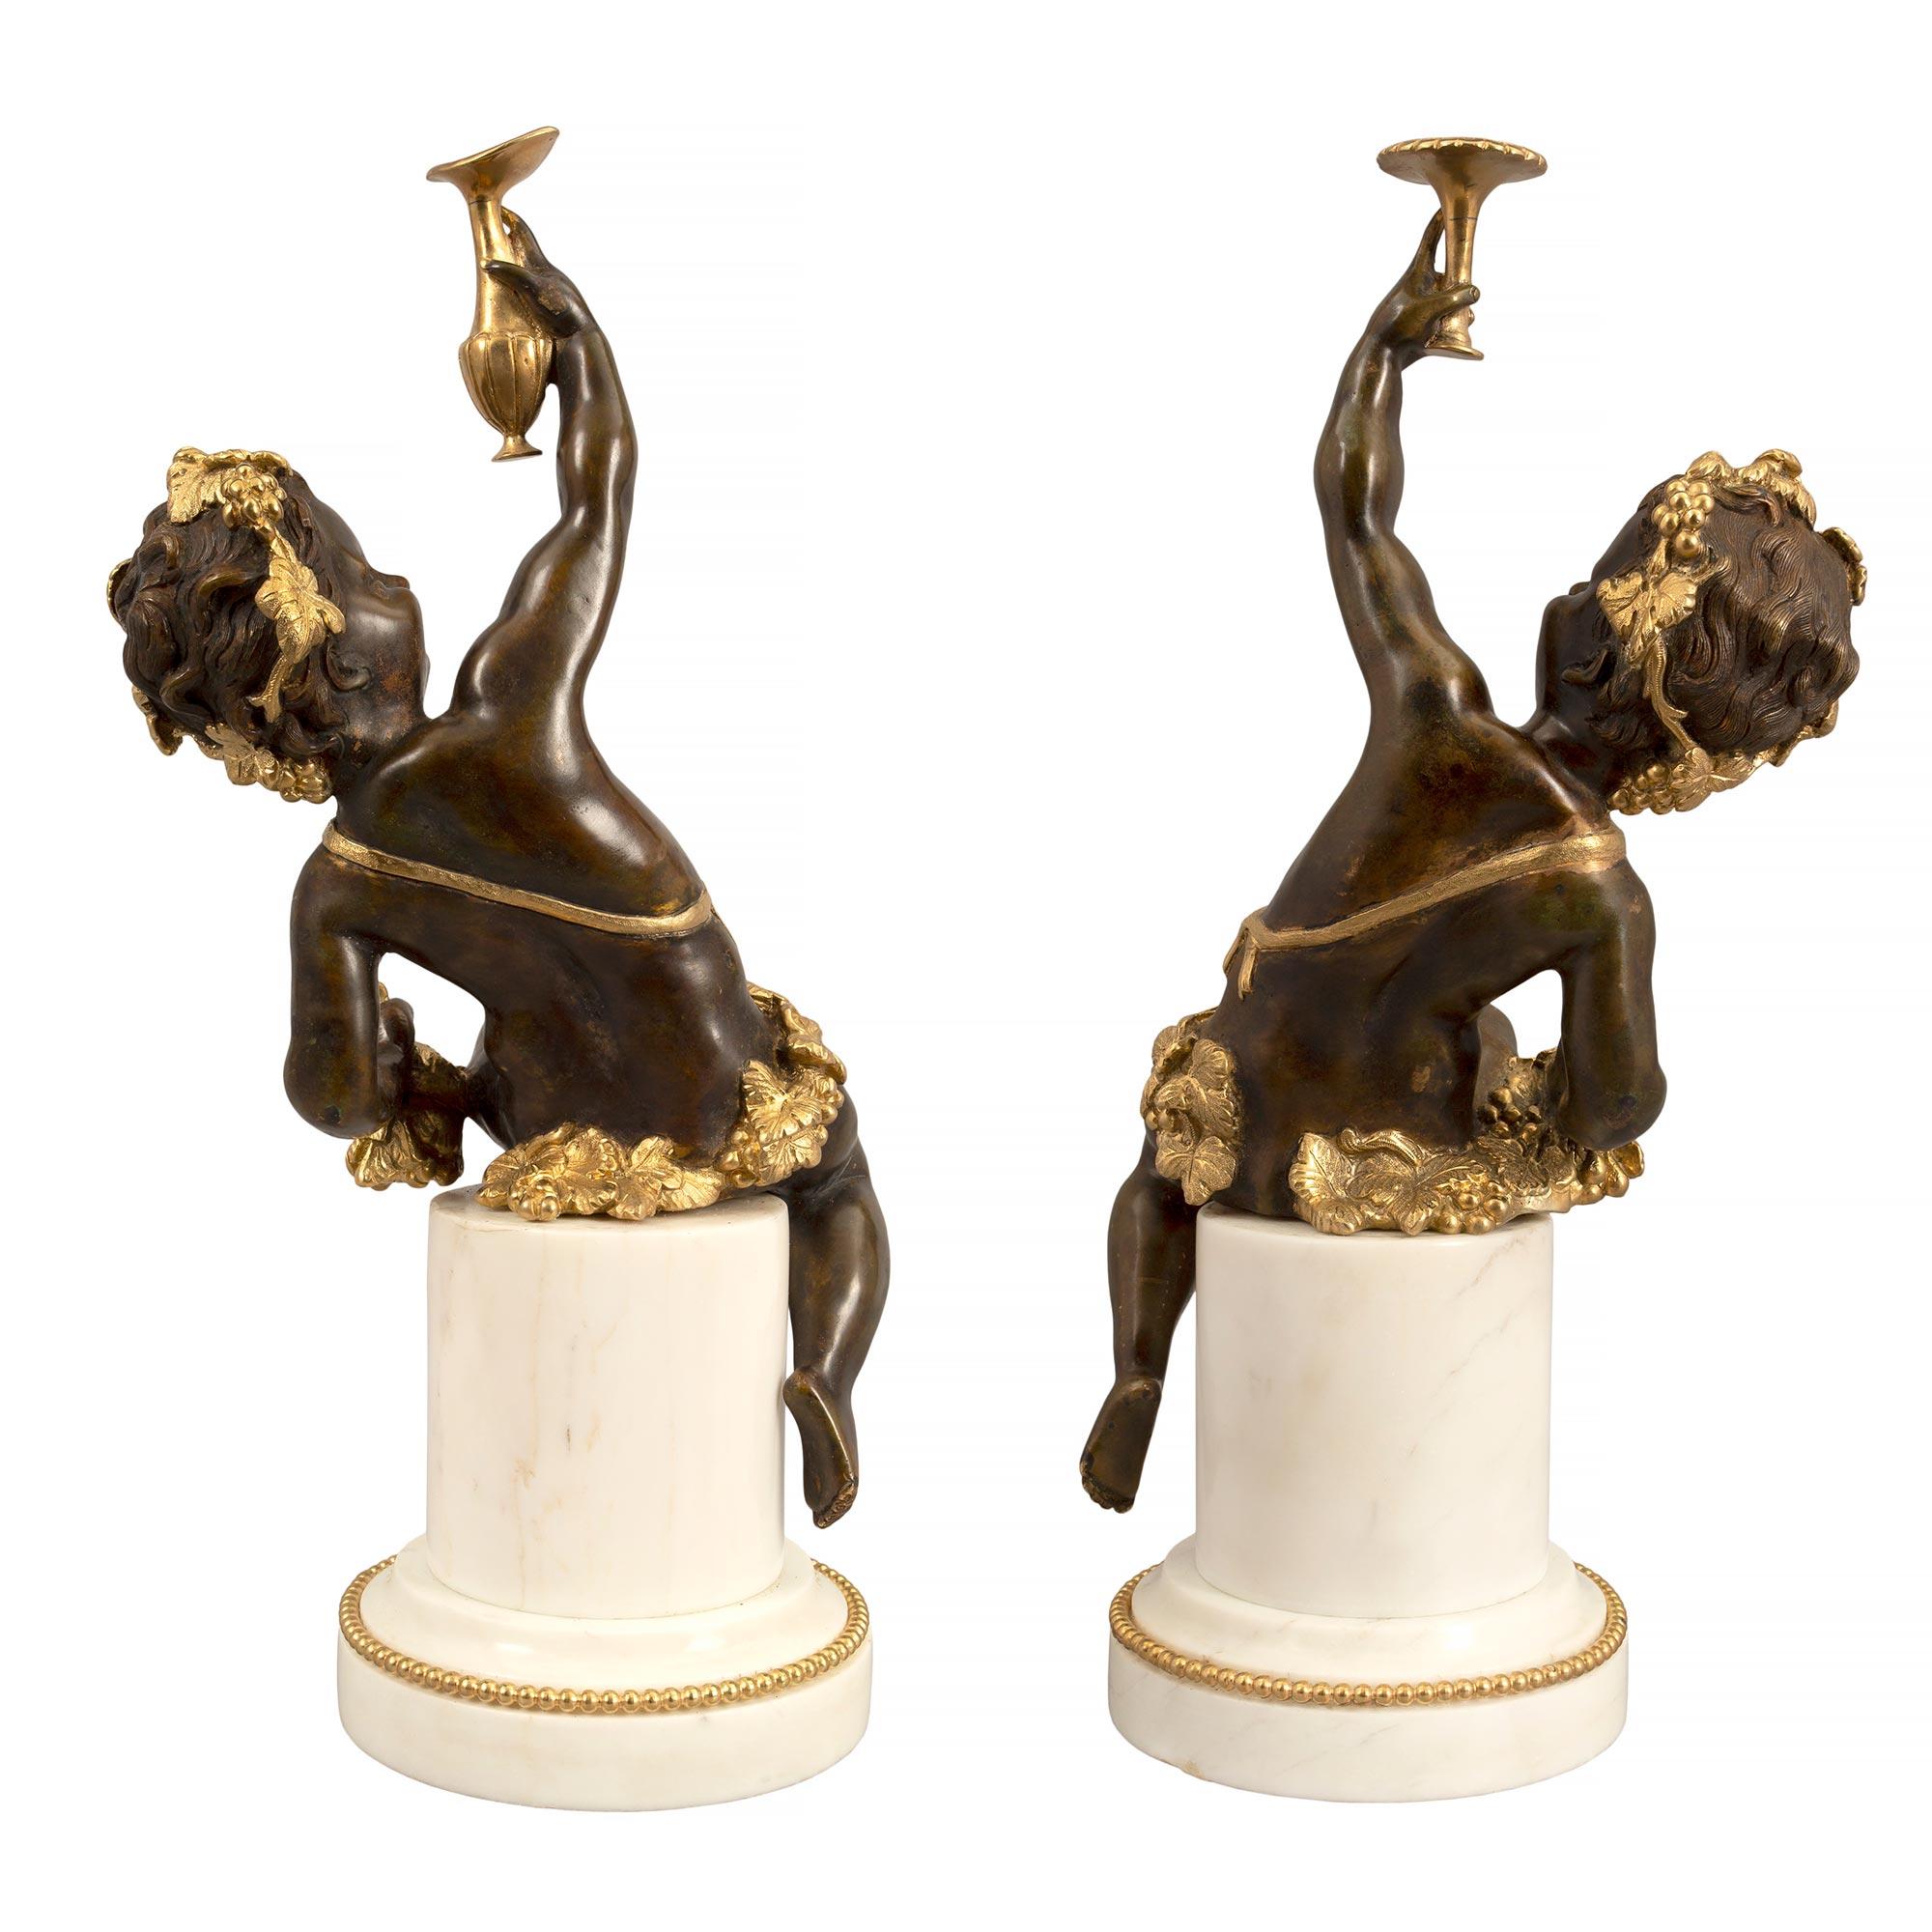 Patinated Pair of French 19th Century Louis XVI Style Statues of Joyful Cherubs